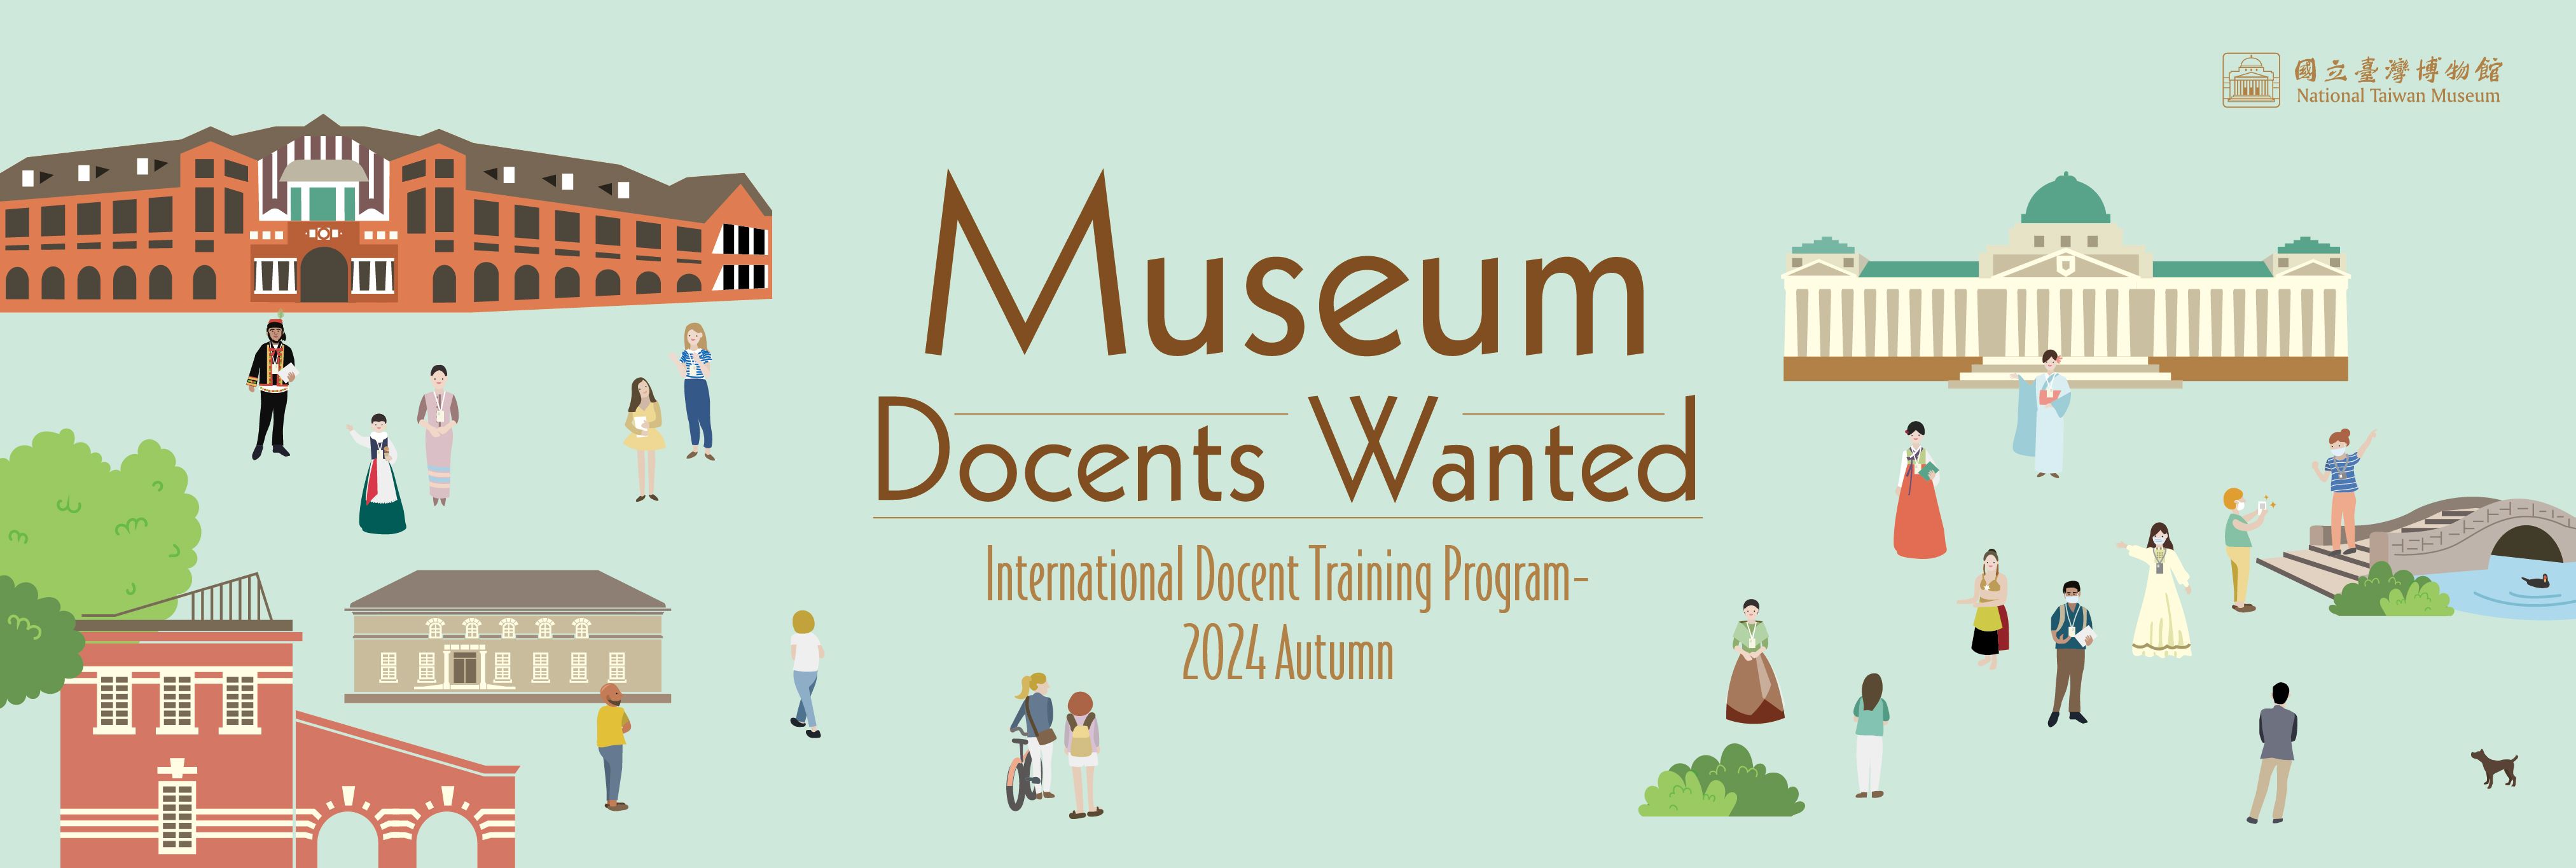 Recruitment for International Docent Training Program Autumn 2024